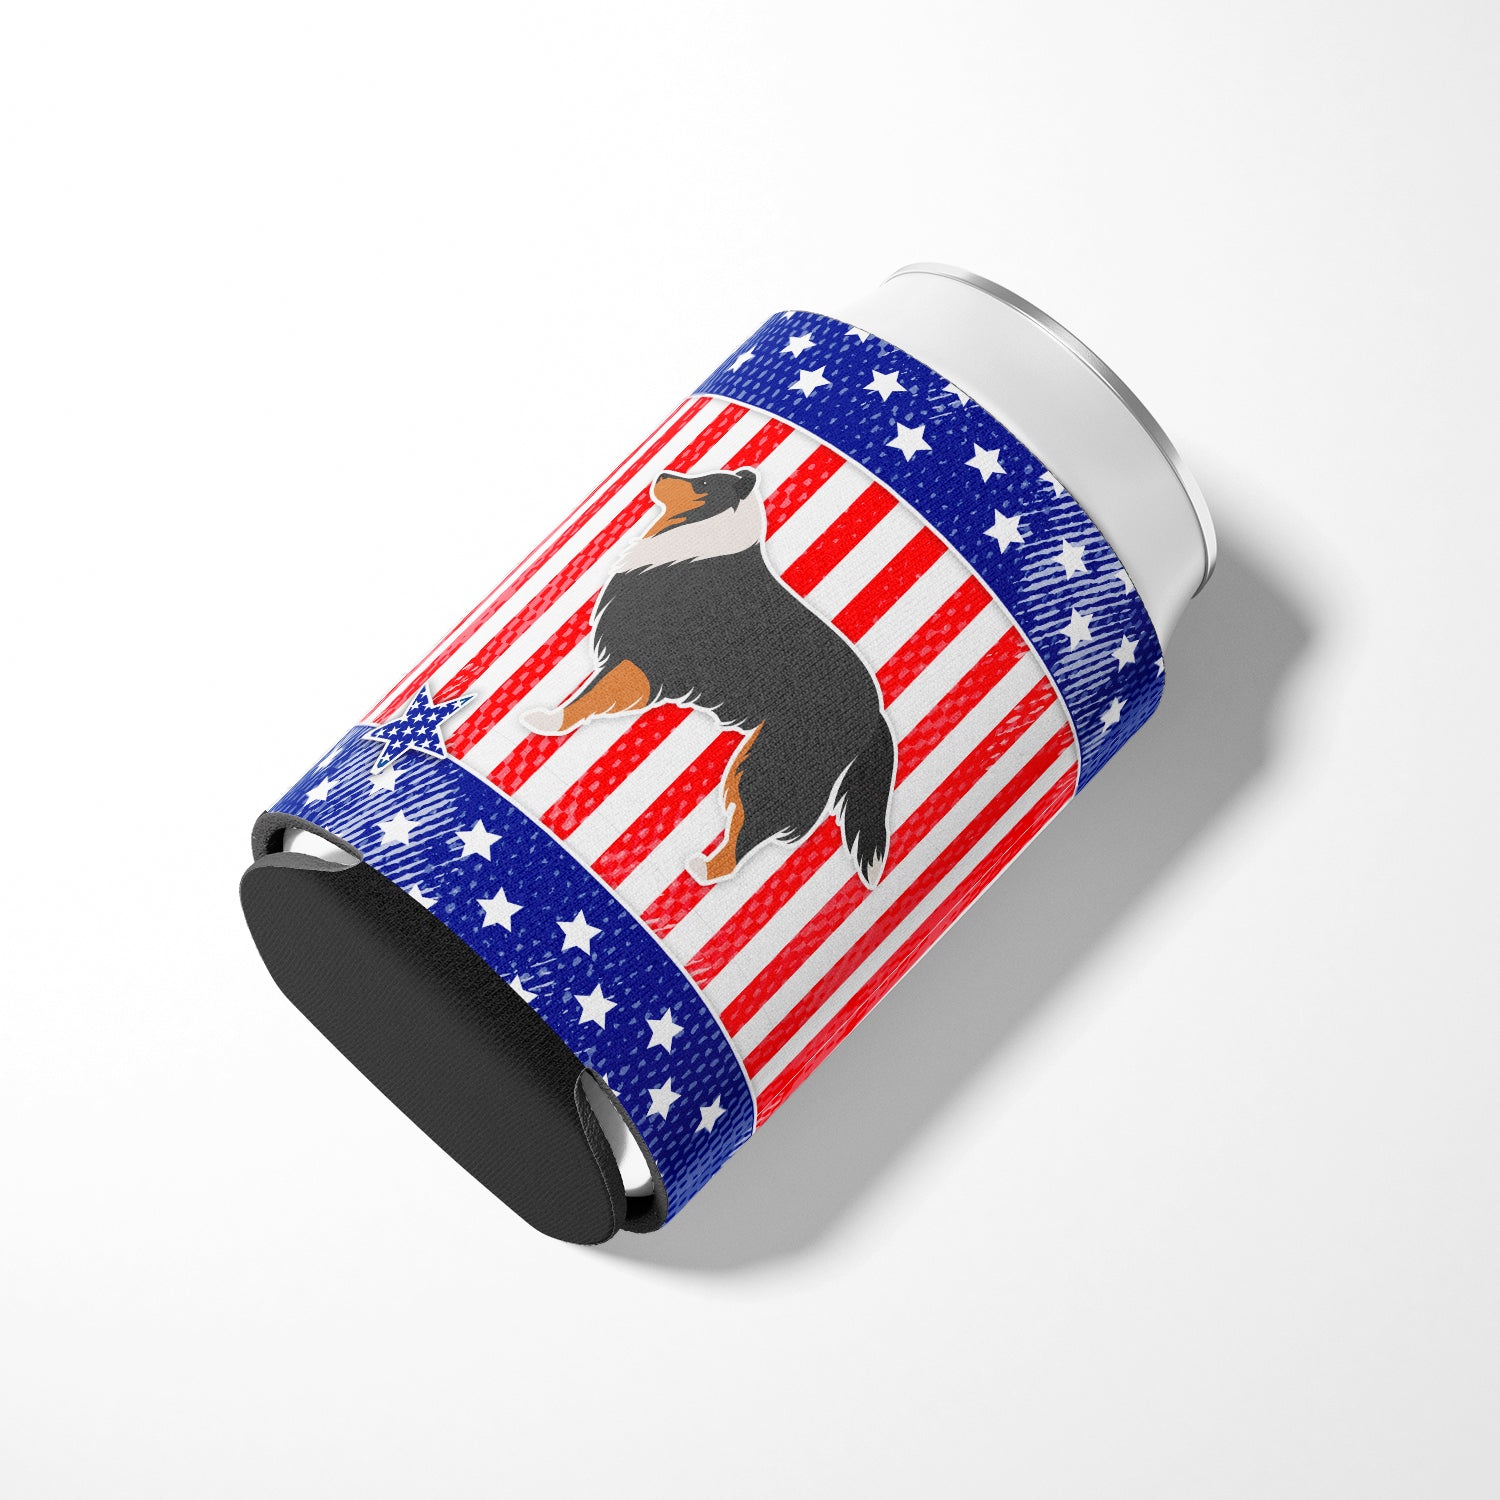 USA Patriotic Sheltie/Shetland Sheepdog Can or Bottle Hugger BB3330CC  the-store.com.